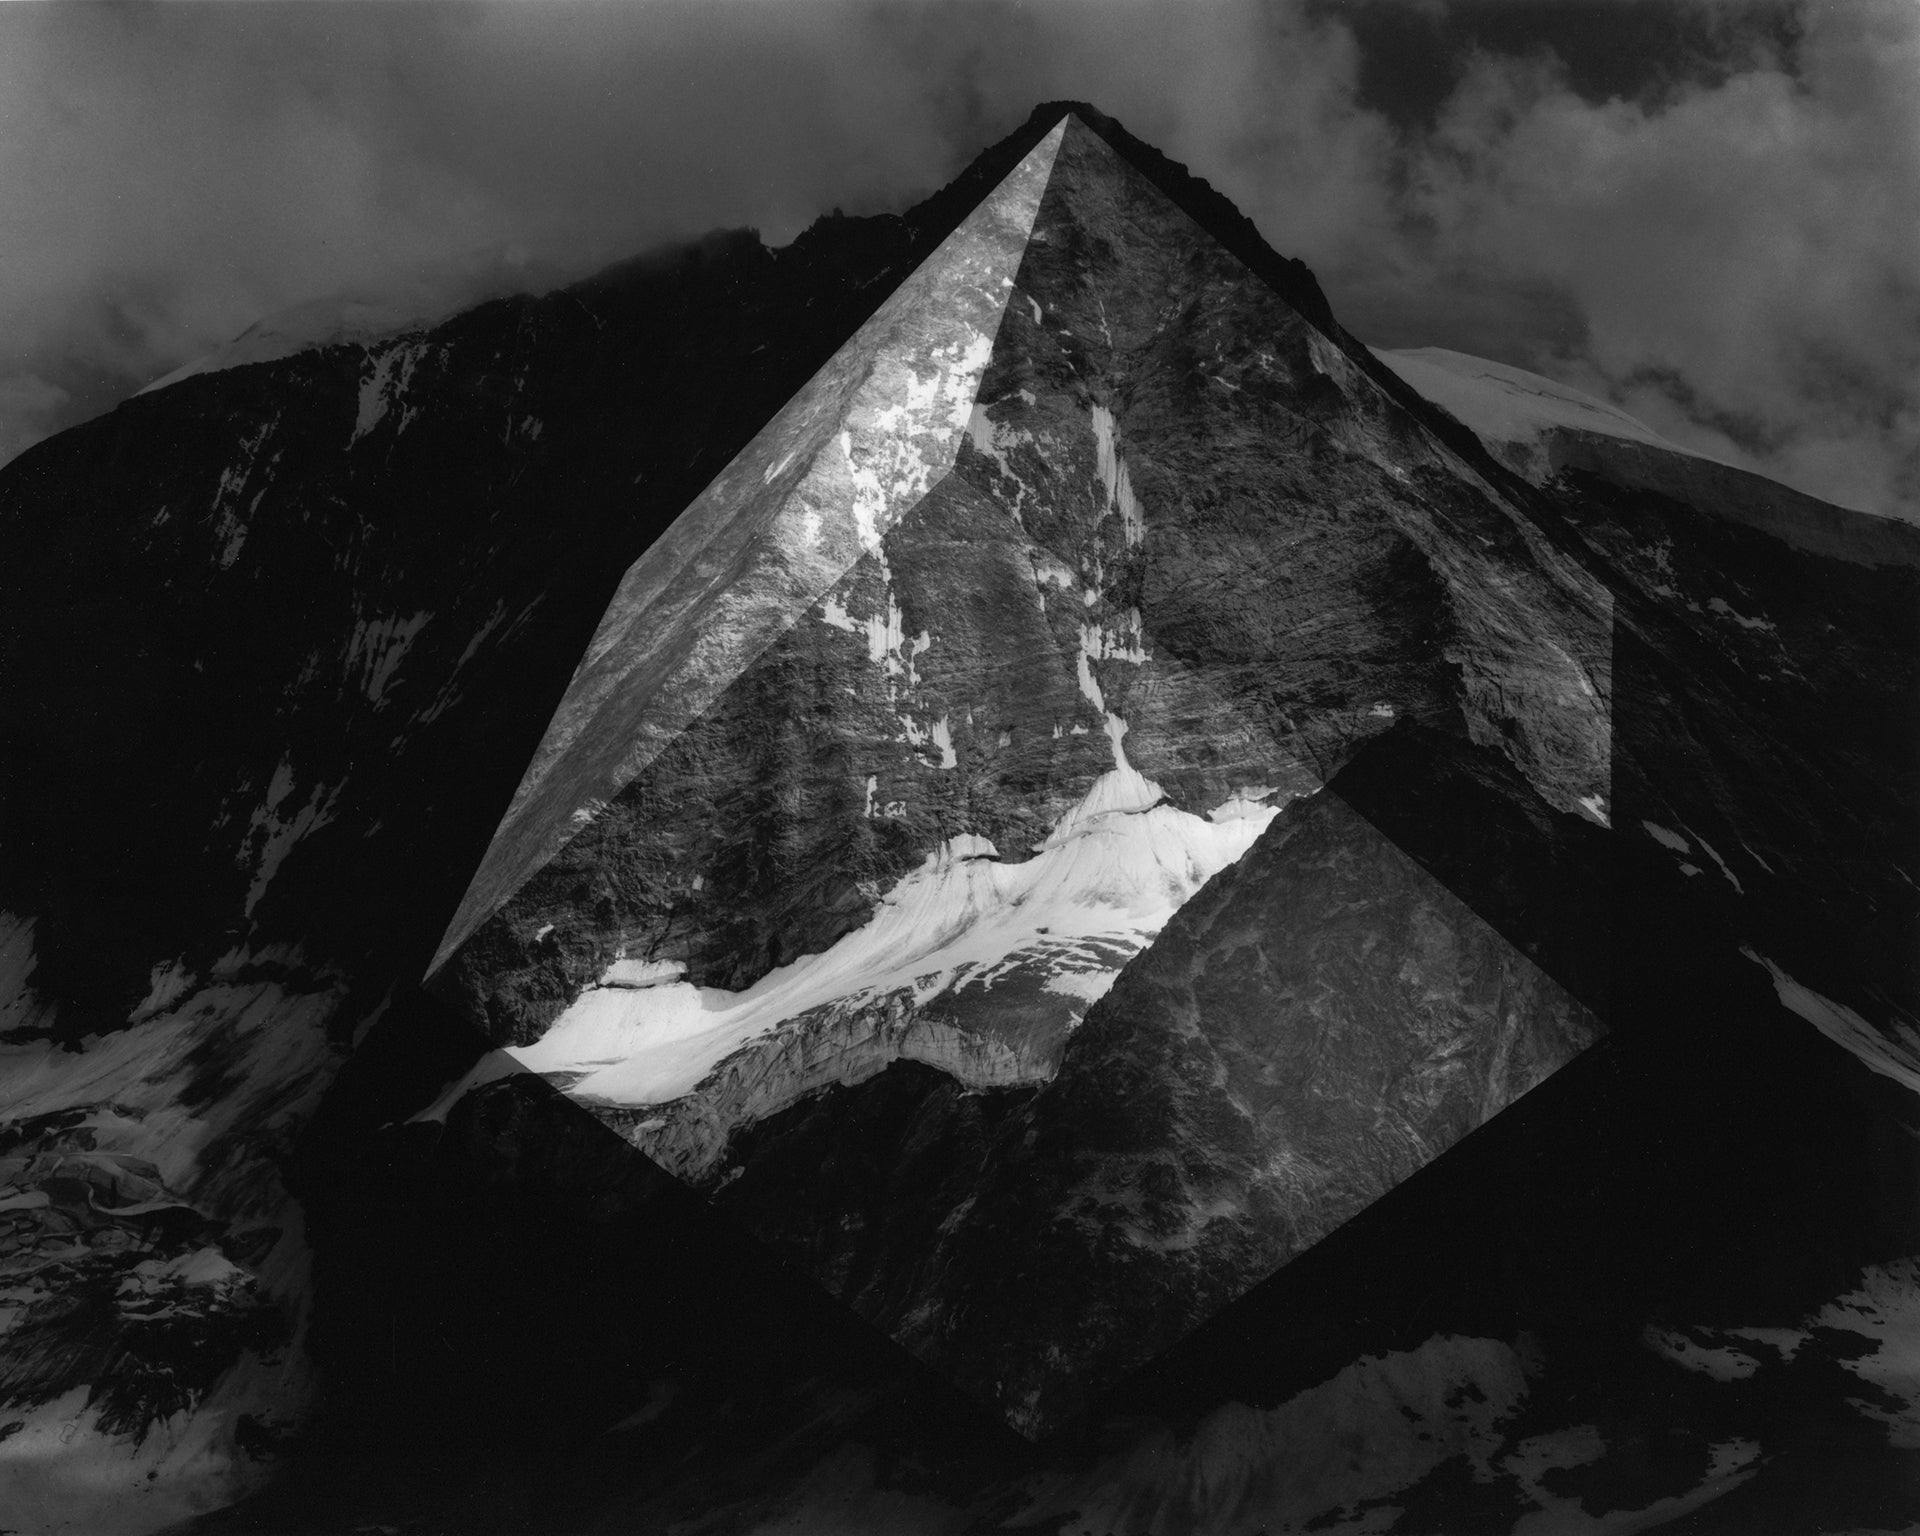 Photography by Millee Tibbs titled "Hexaderon / Mont Blanc de Cheilon: Crux".